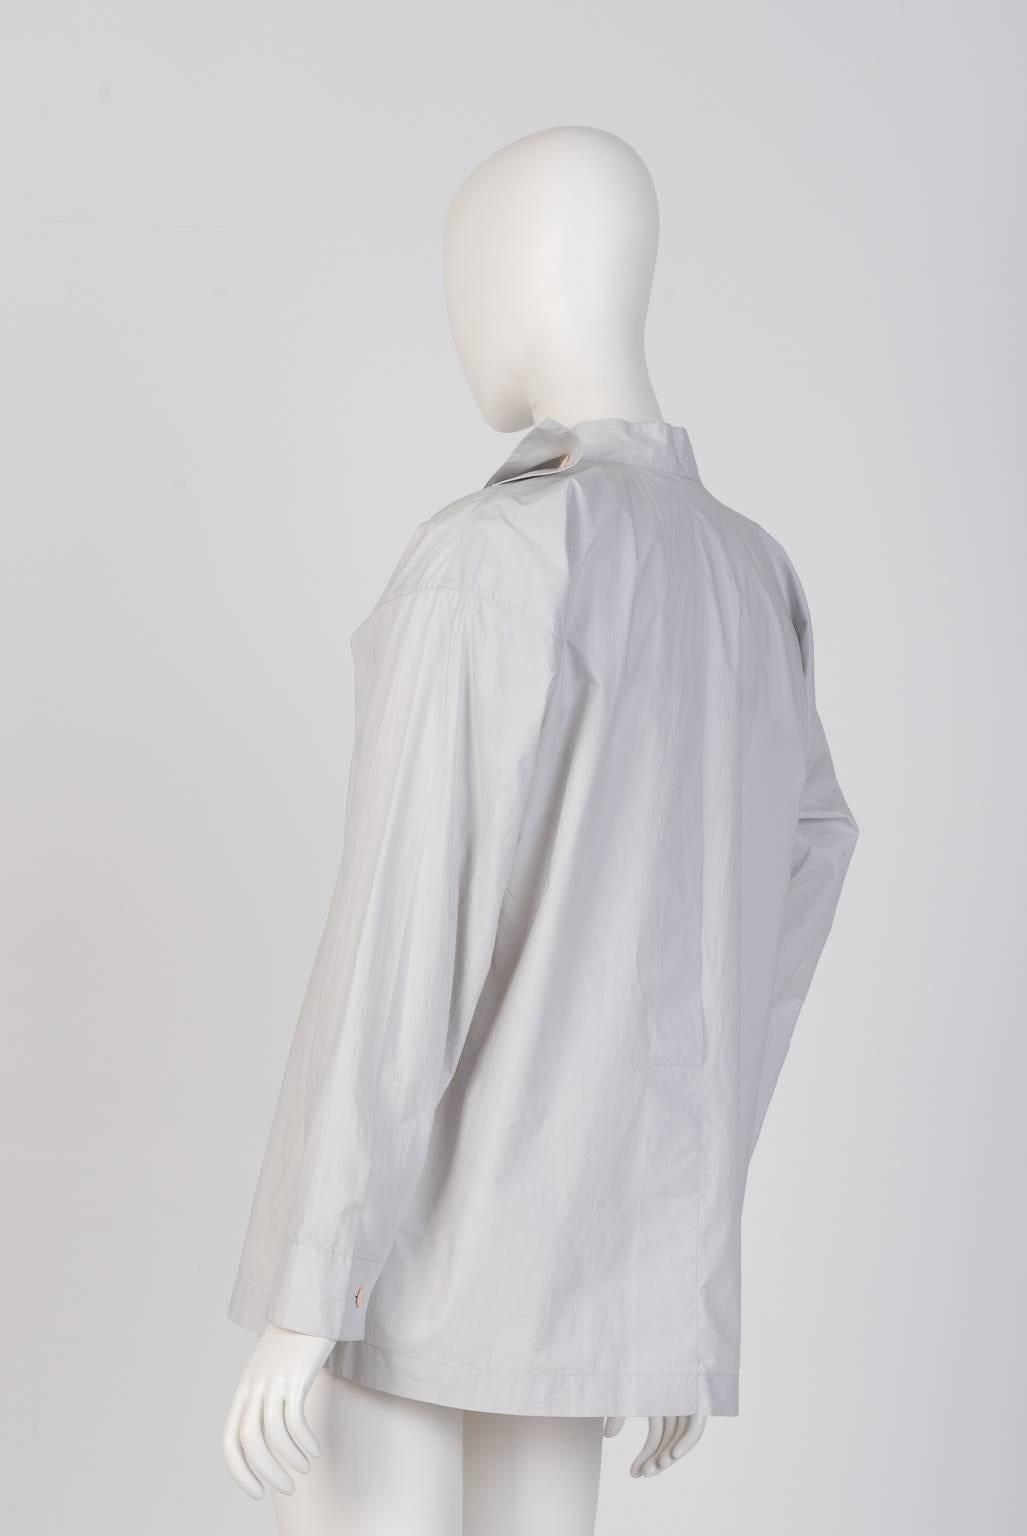 Issey Miyake Poplin Cotton Shirt In New Condition For Sale In Xiamen, Fujian